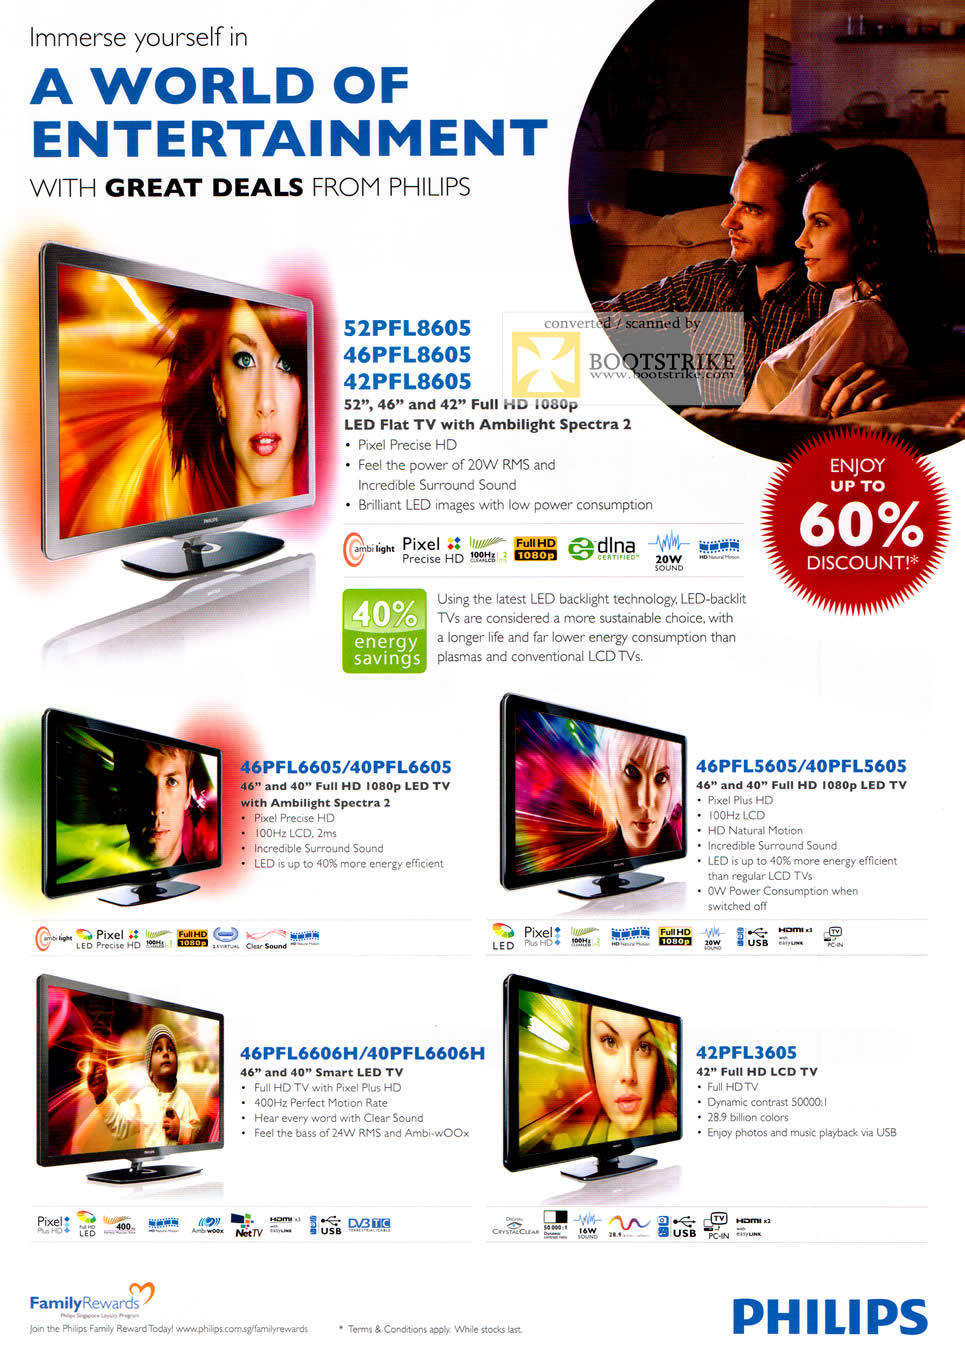 COMEX 2011 price list image brochure of Philips TV LED 52PFL8605 46PFL8605 42PFL8605 46PFL6604 LCD 42PFL360S